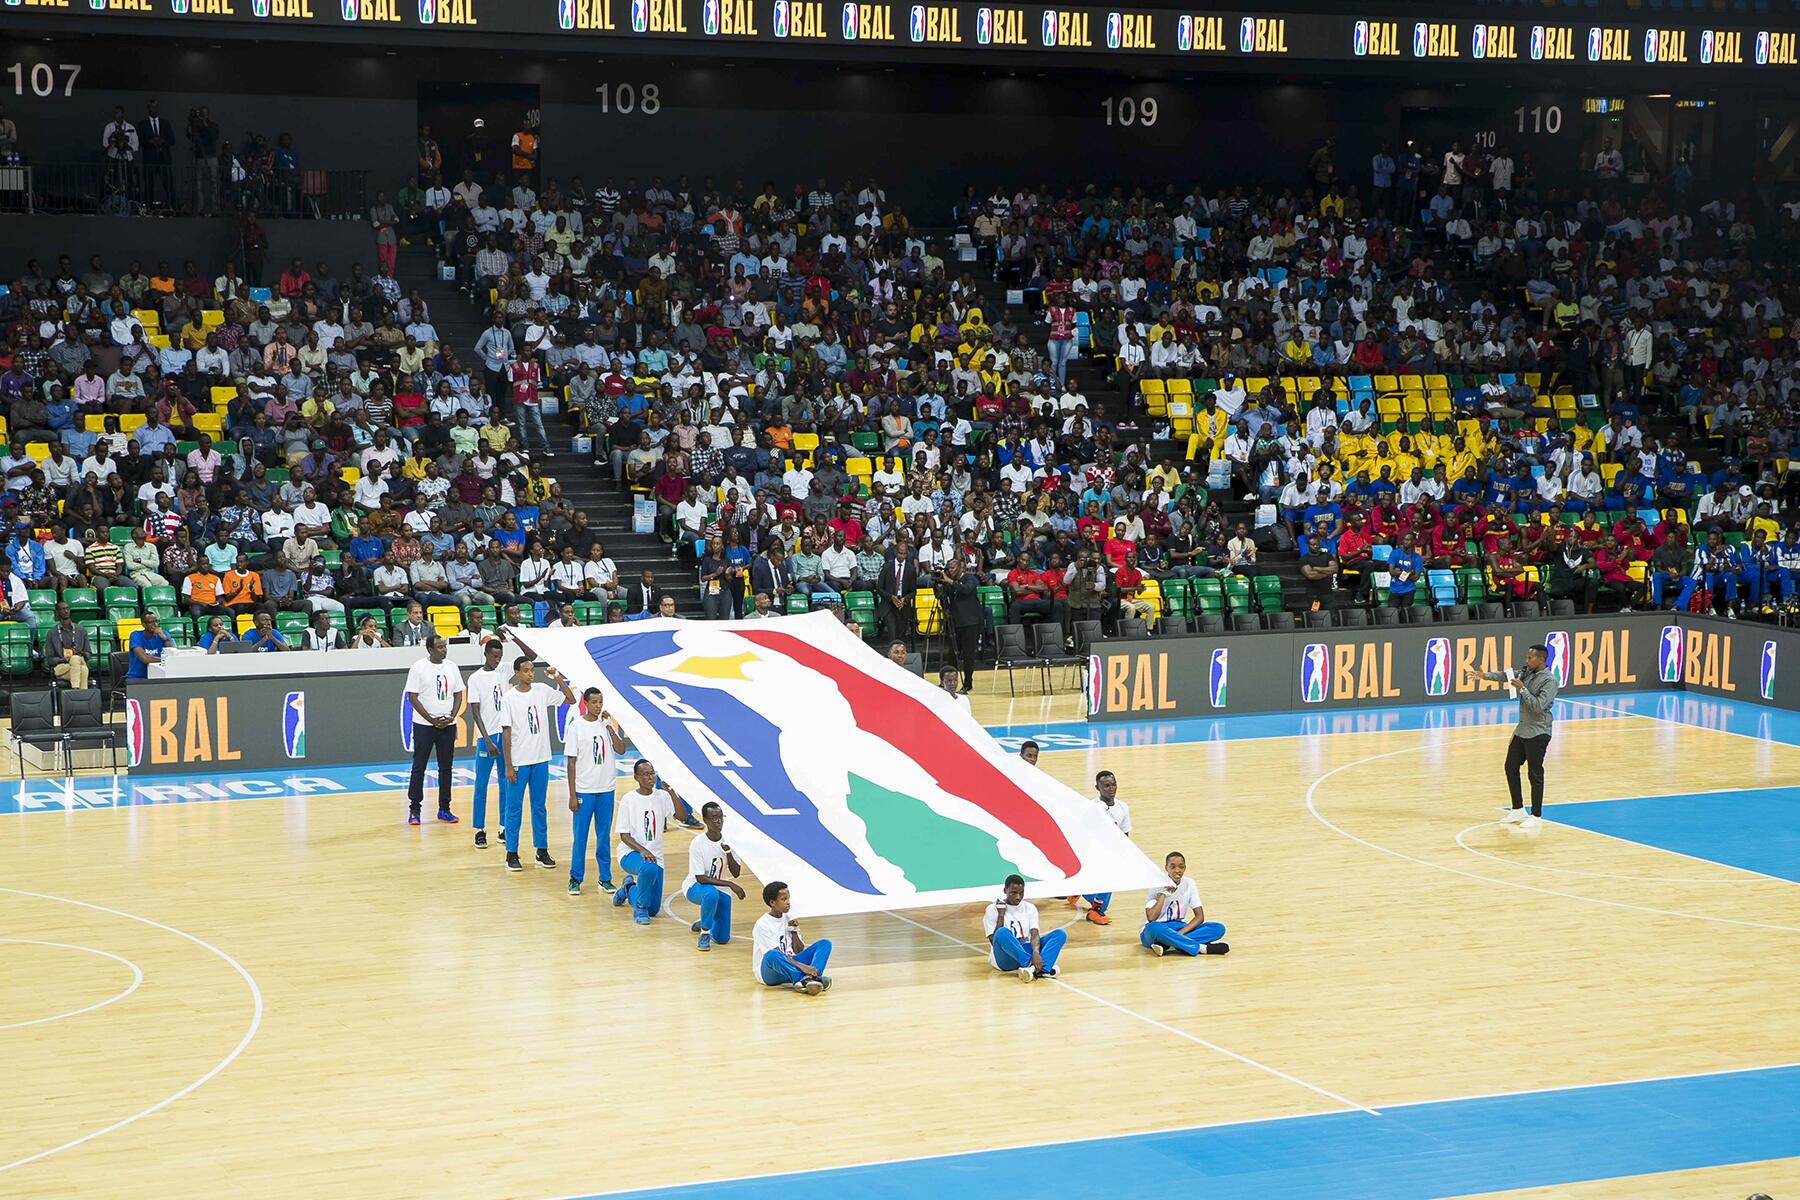 Petro de Luanda earn right to represent Angola at Basketball